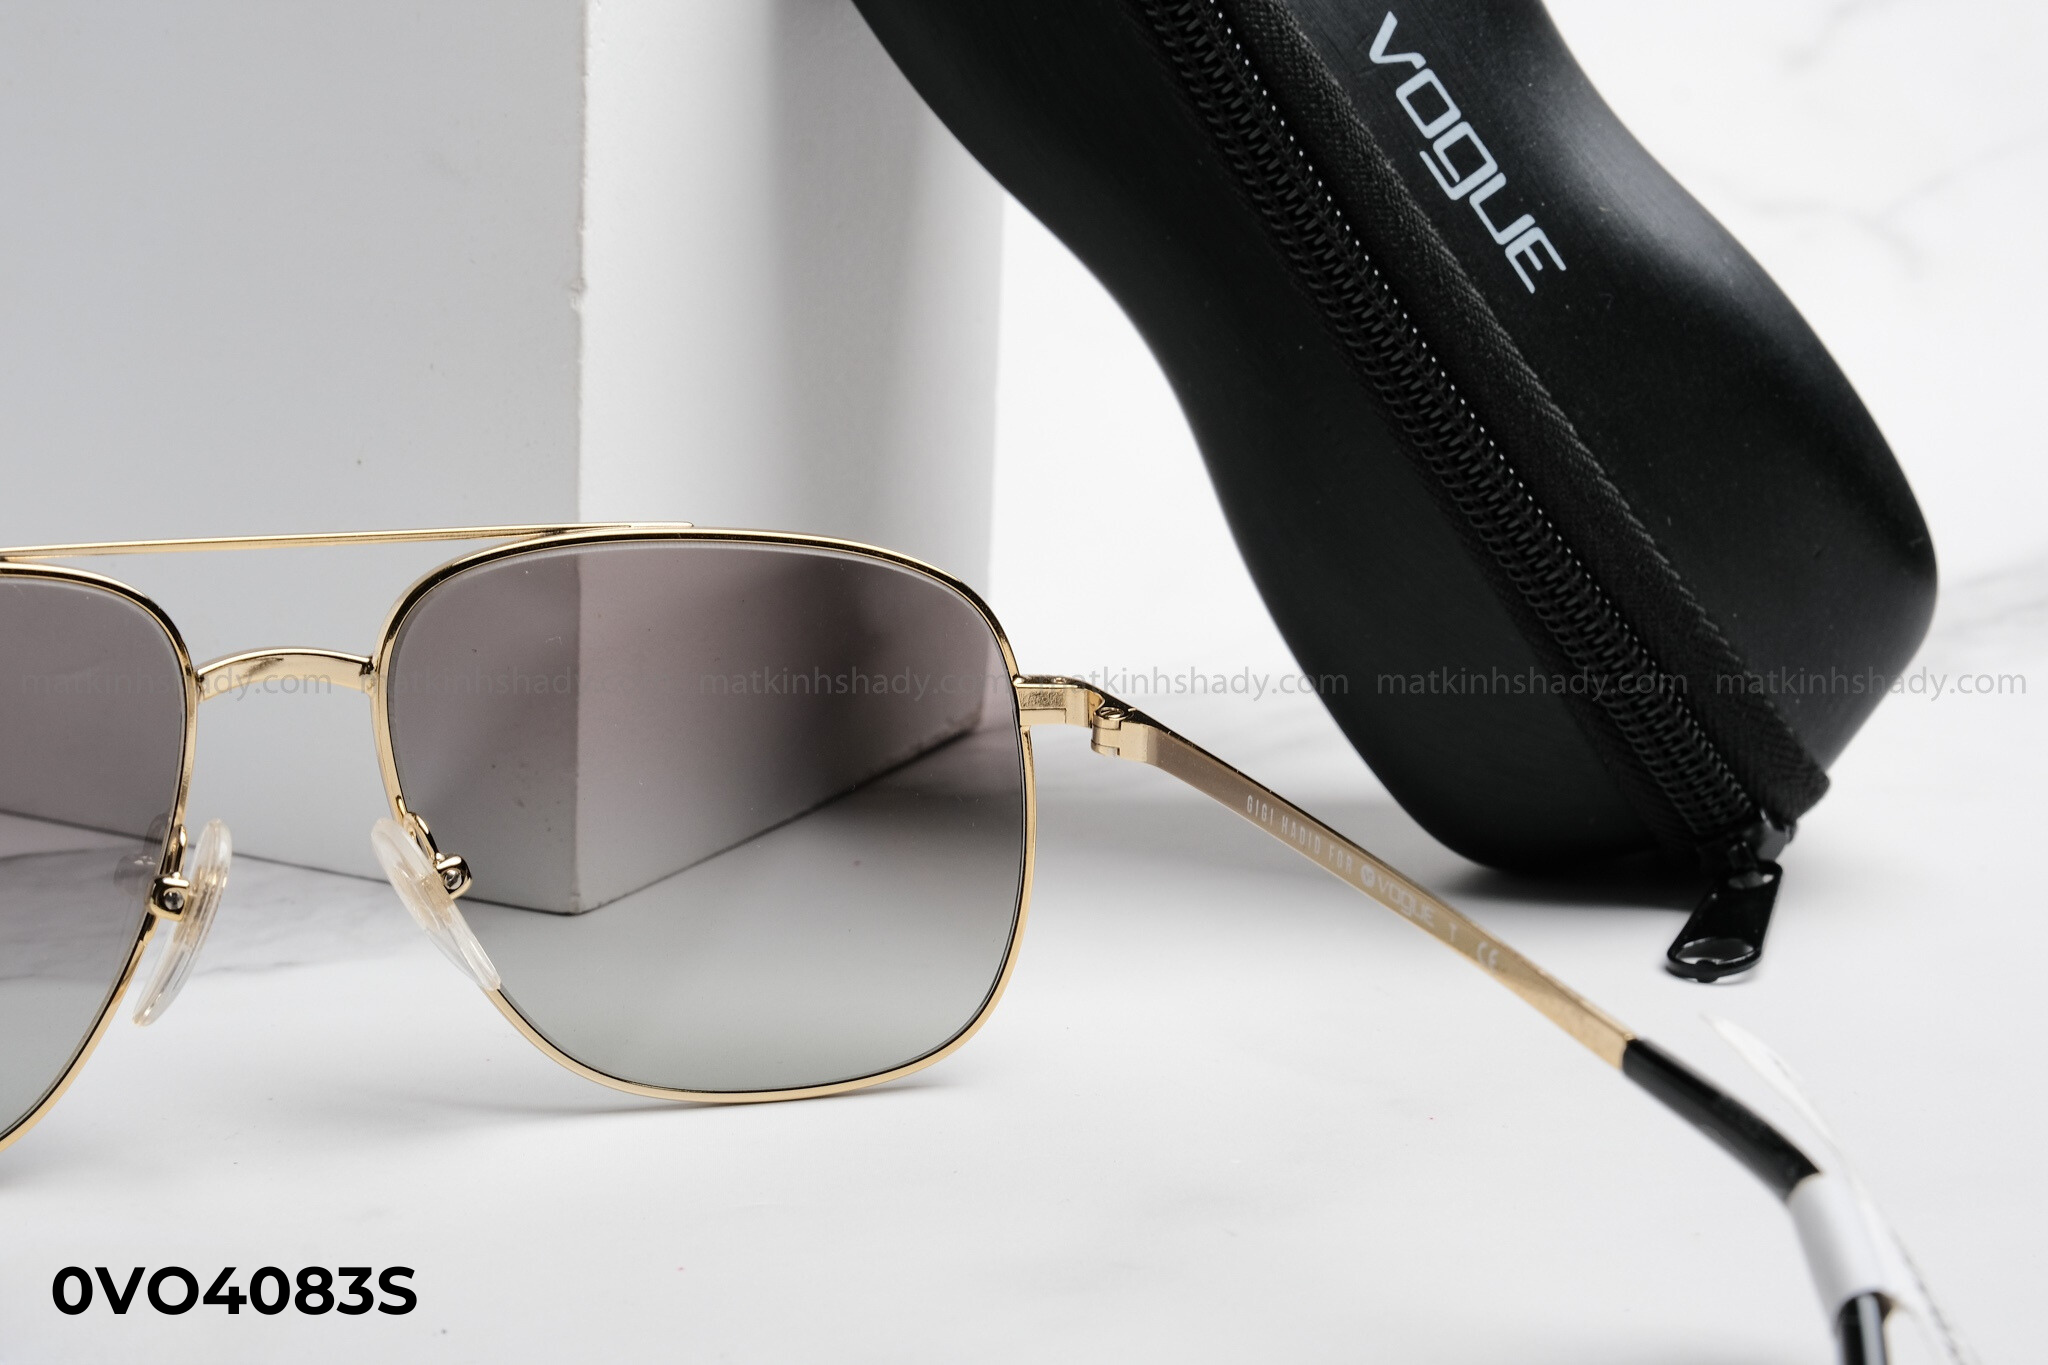  Vogue Eyewear - Sunglasses - 0VO4083S 